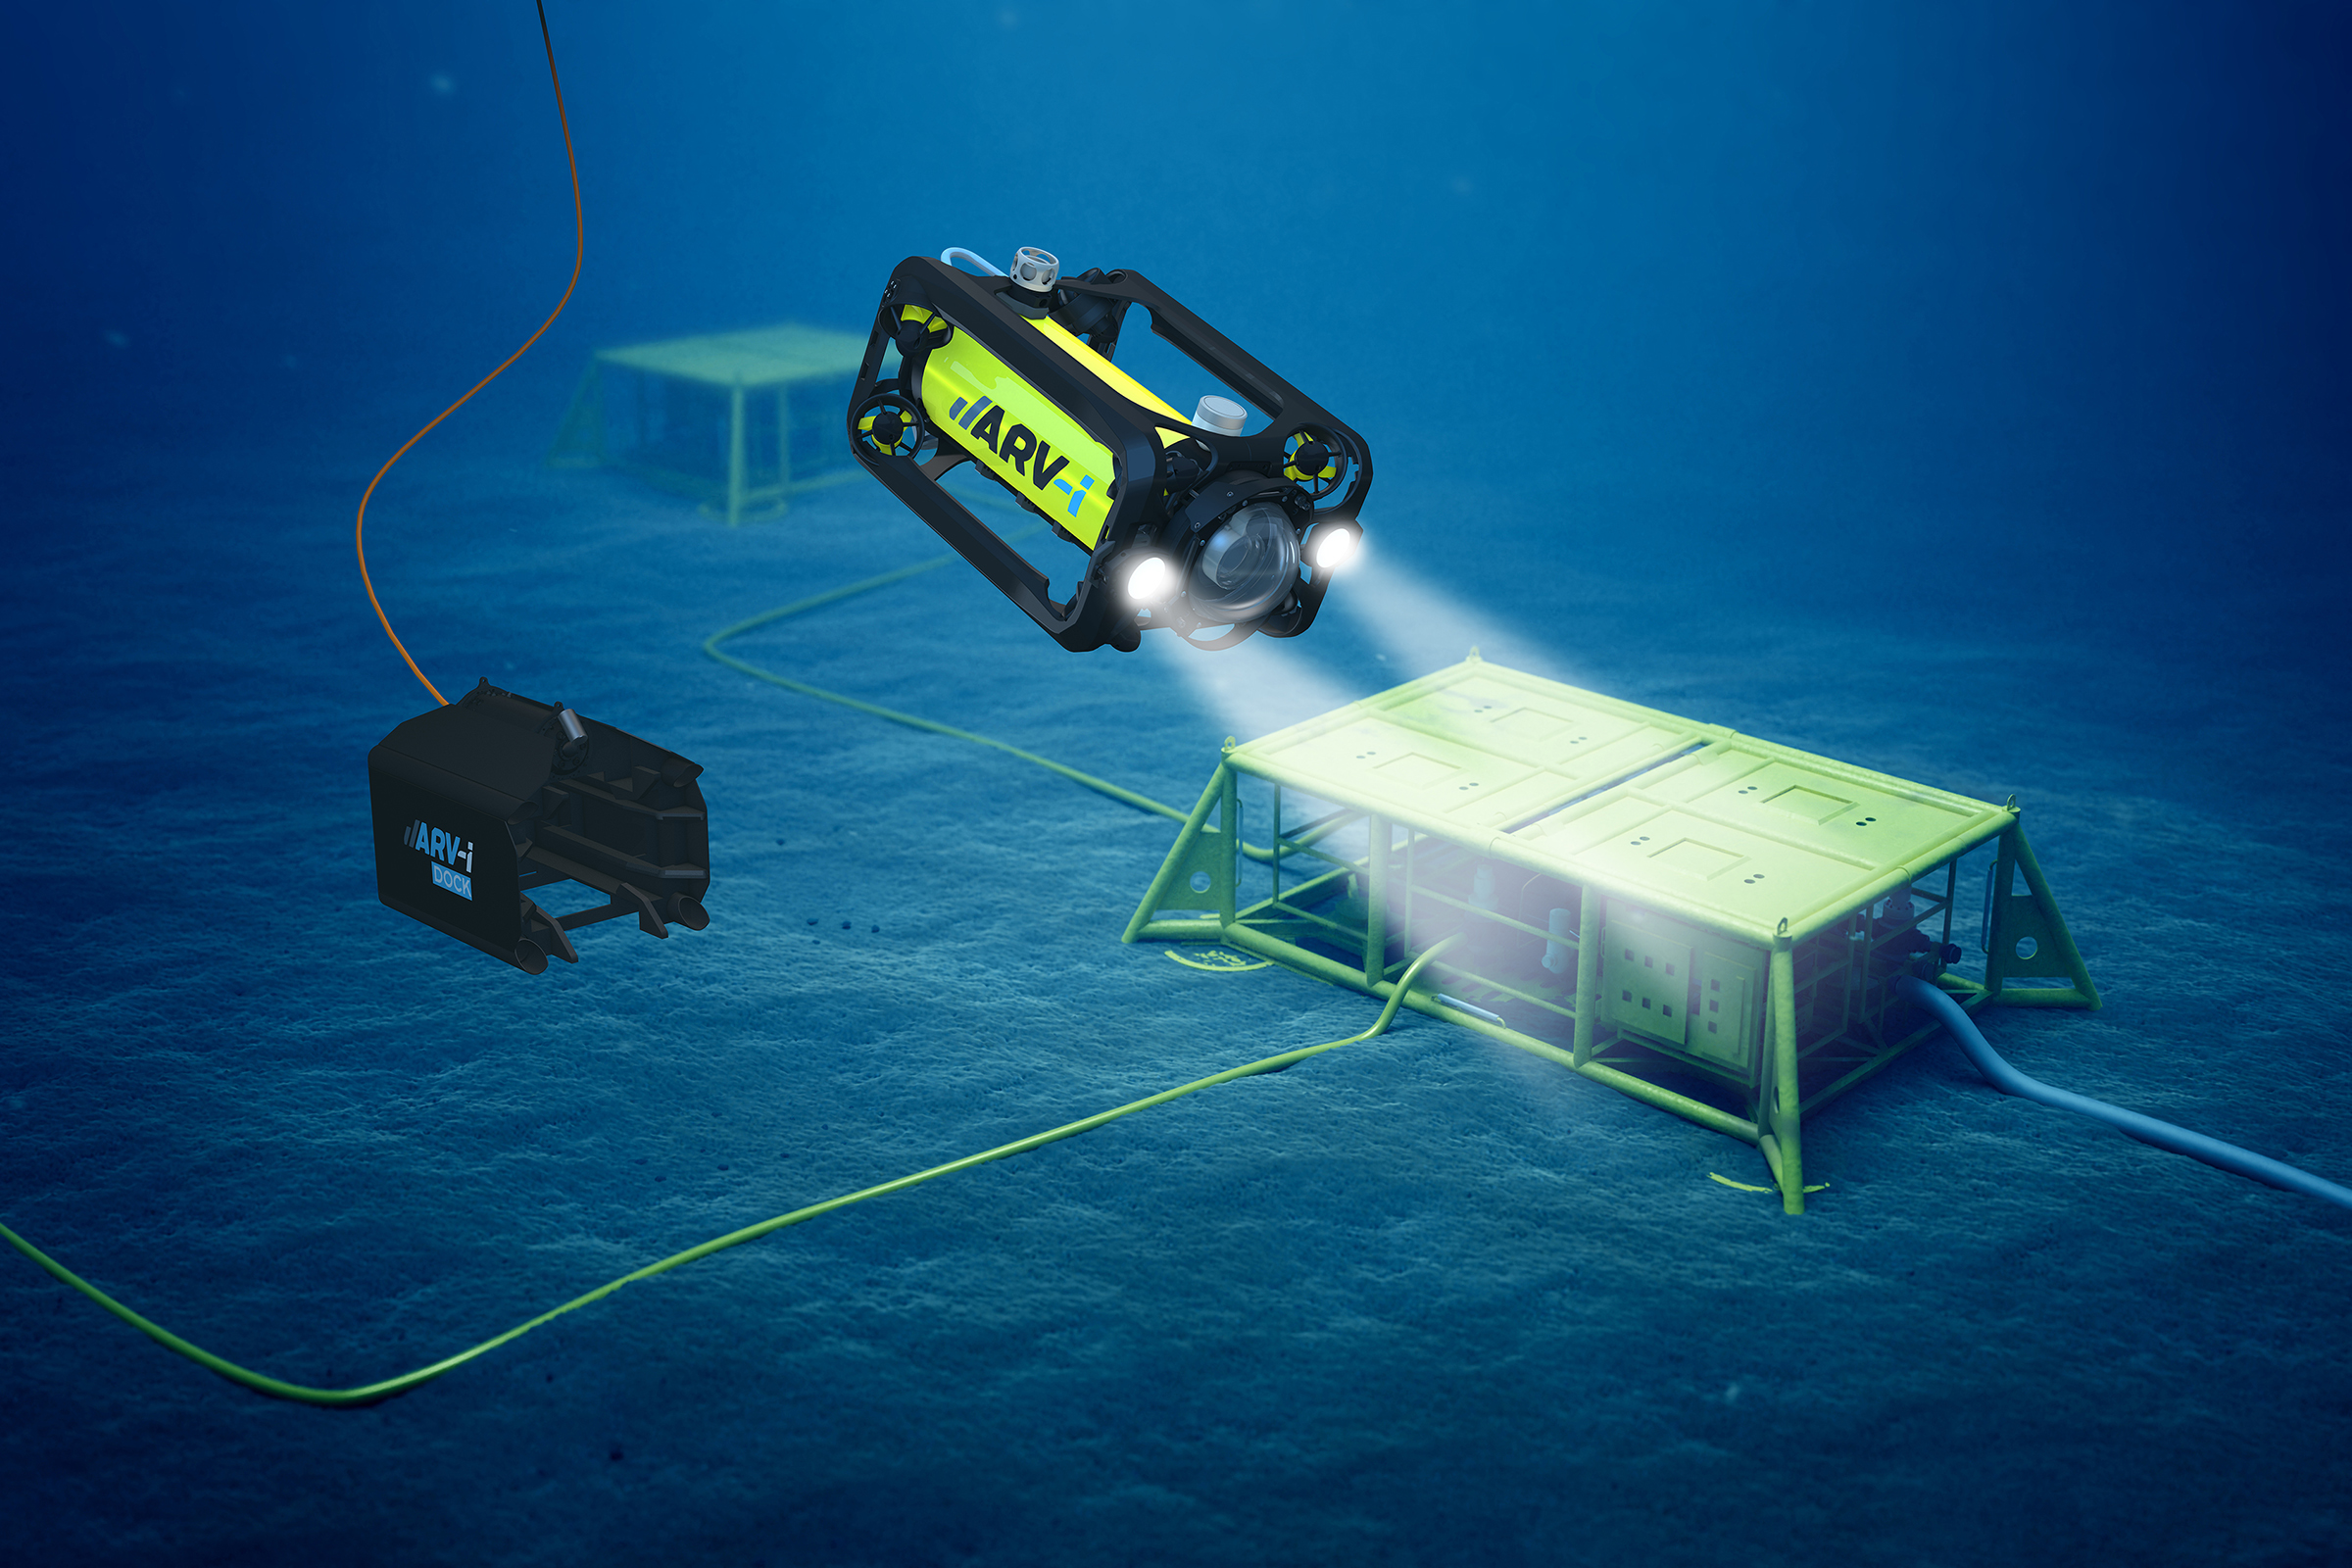 Boxfish, Transmark unveil long-endurance underwater observation vehicle